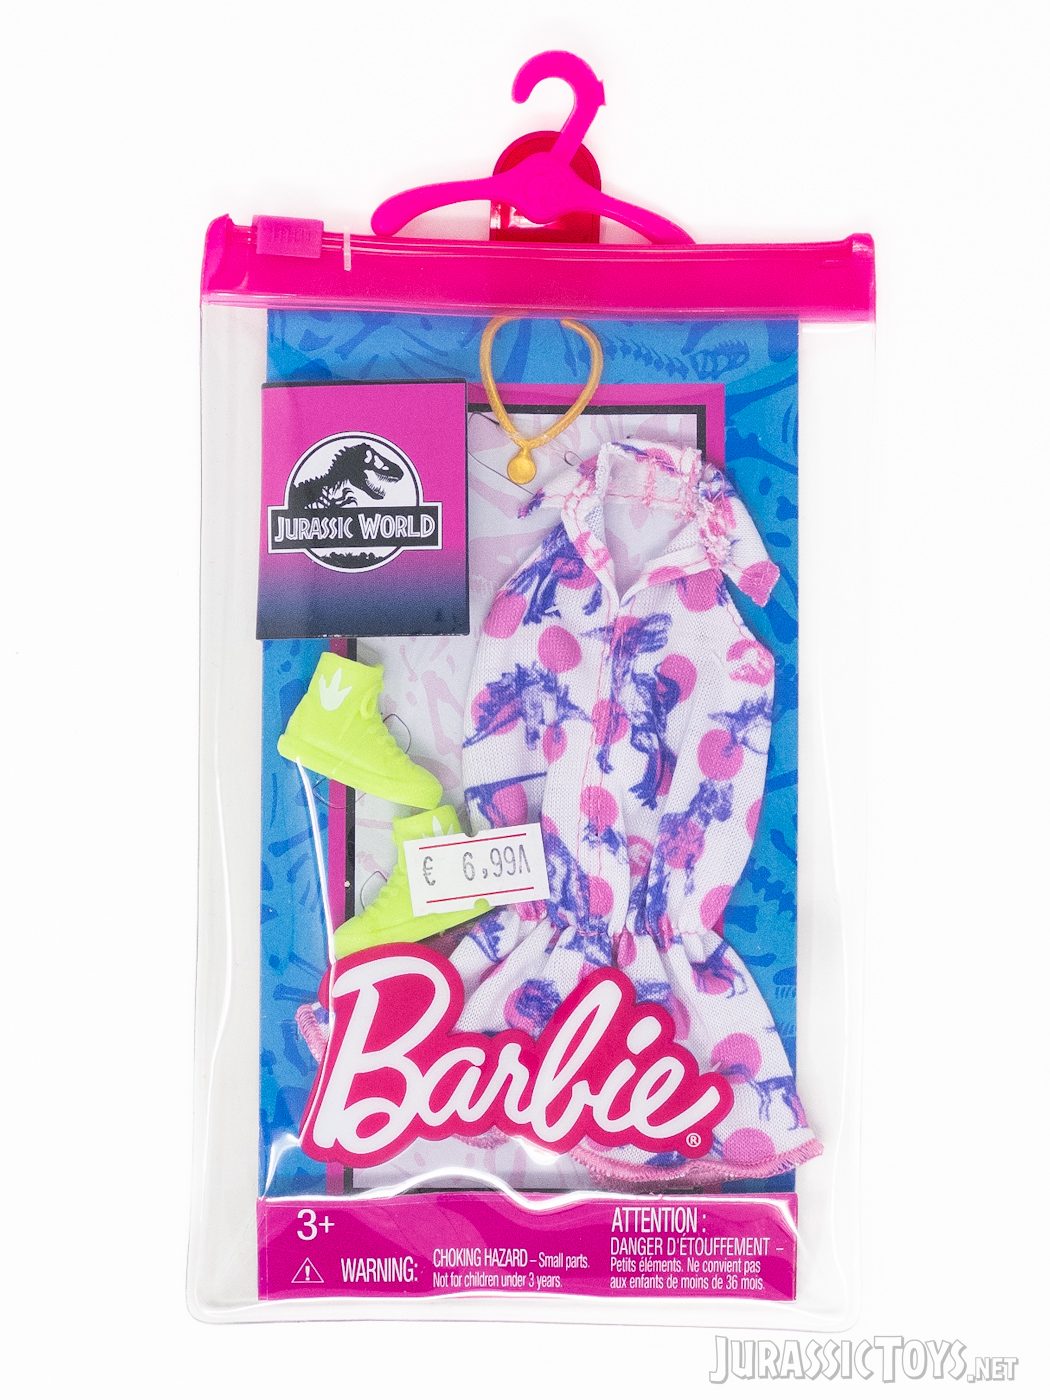 Barbie Storytelling Fashion Pack inspired by Jurassic World #3 ...